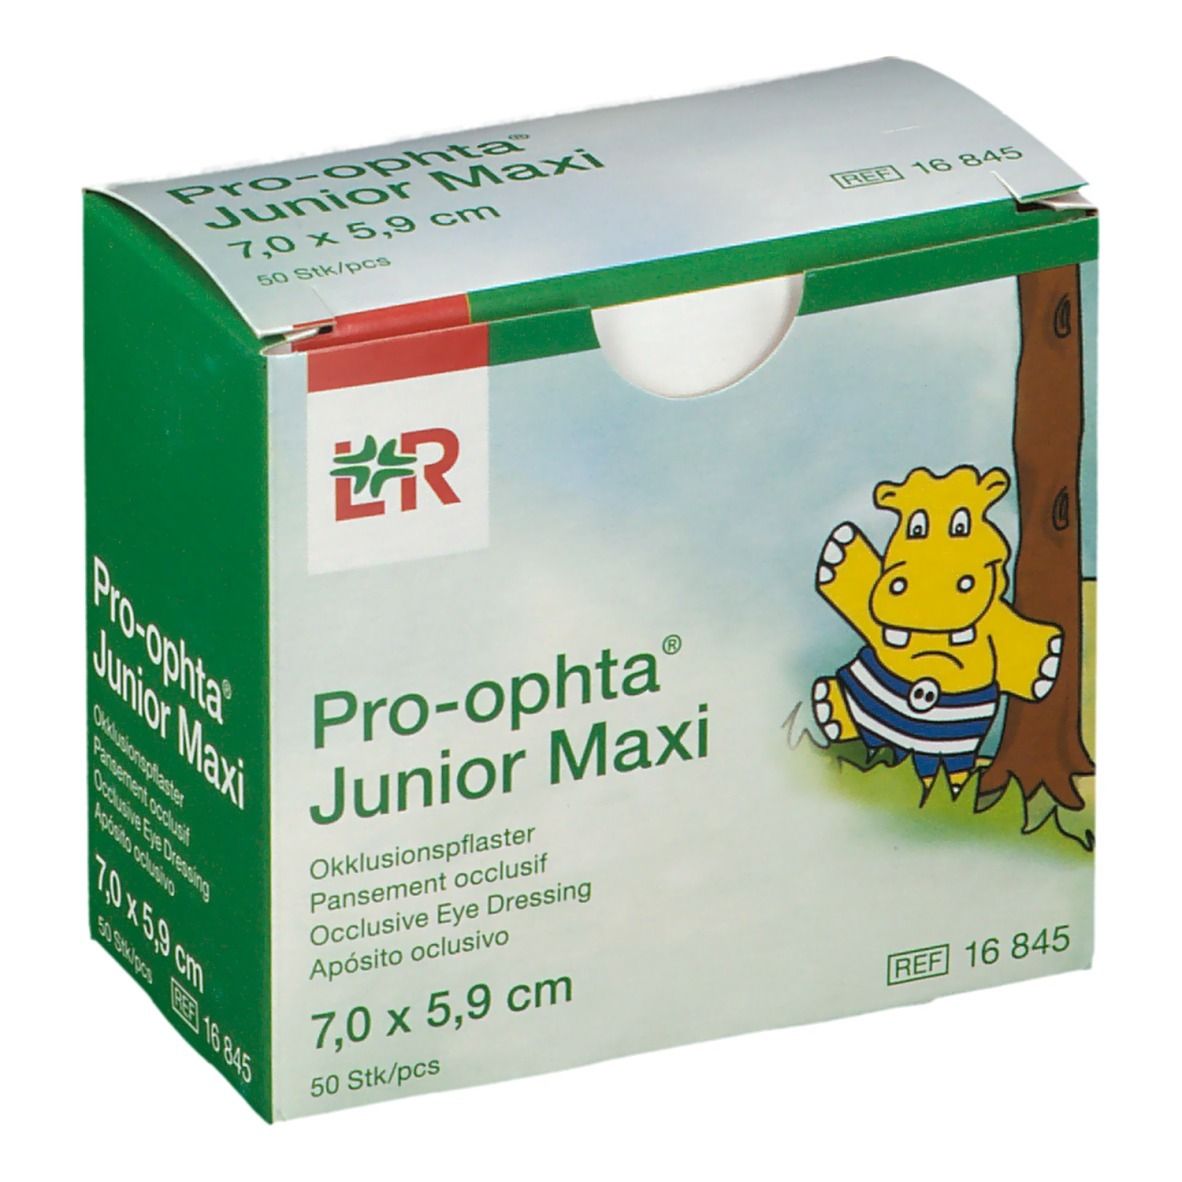 L&R Pro-Ophta® Junior maxi 7,0 x 5,9 cm